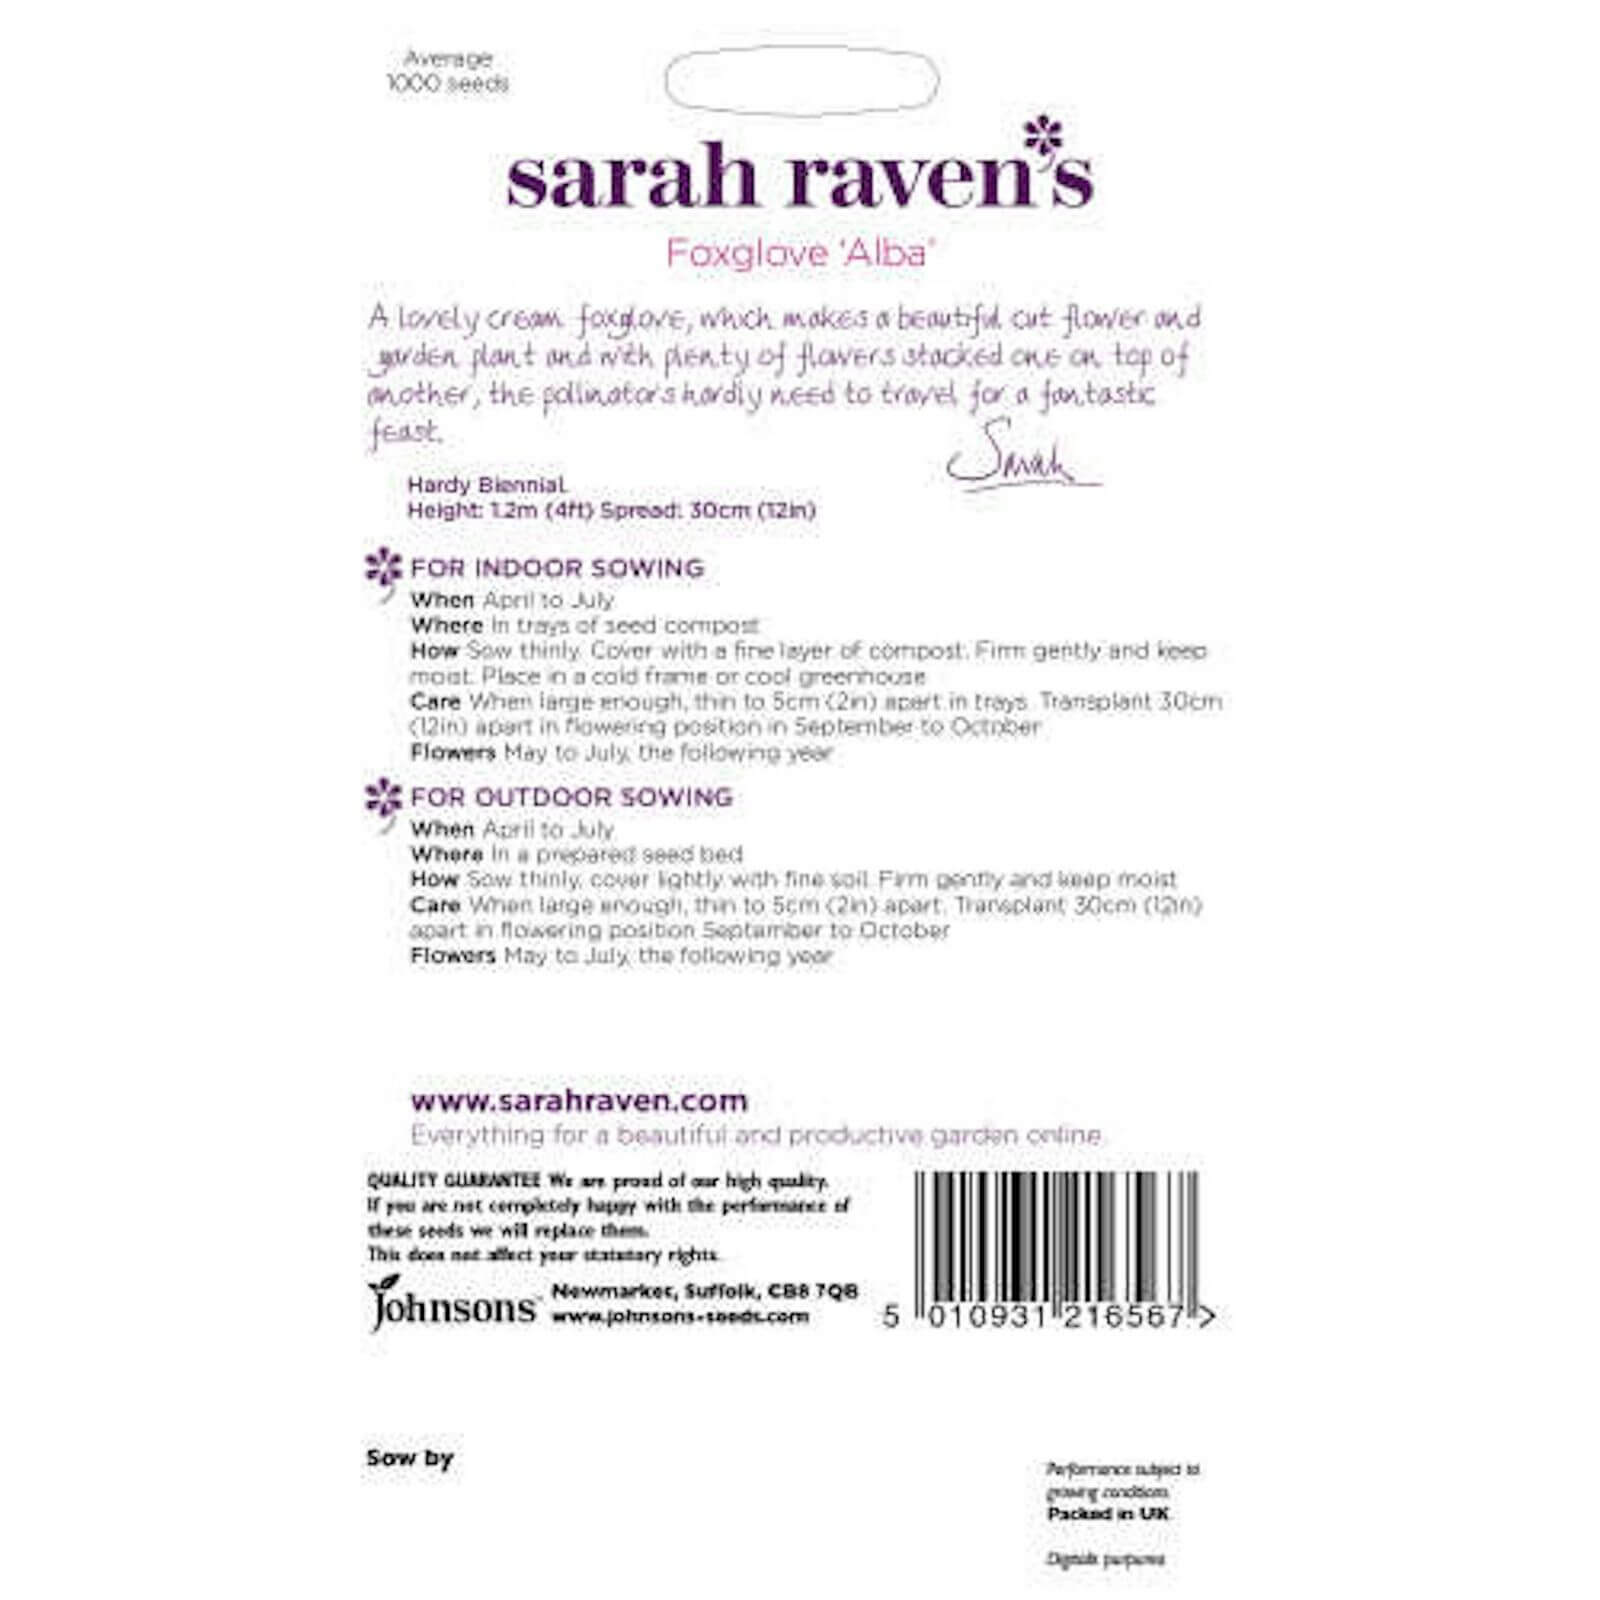 Sarah Ravens Foxglove Alba Seeds